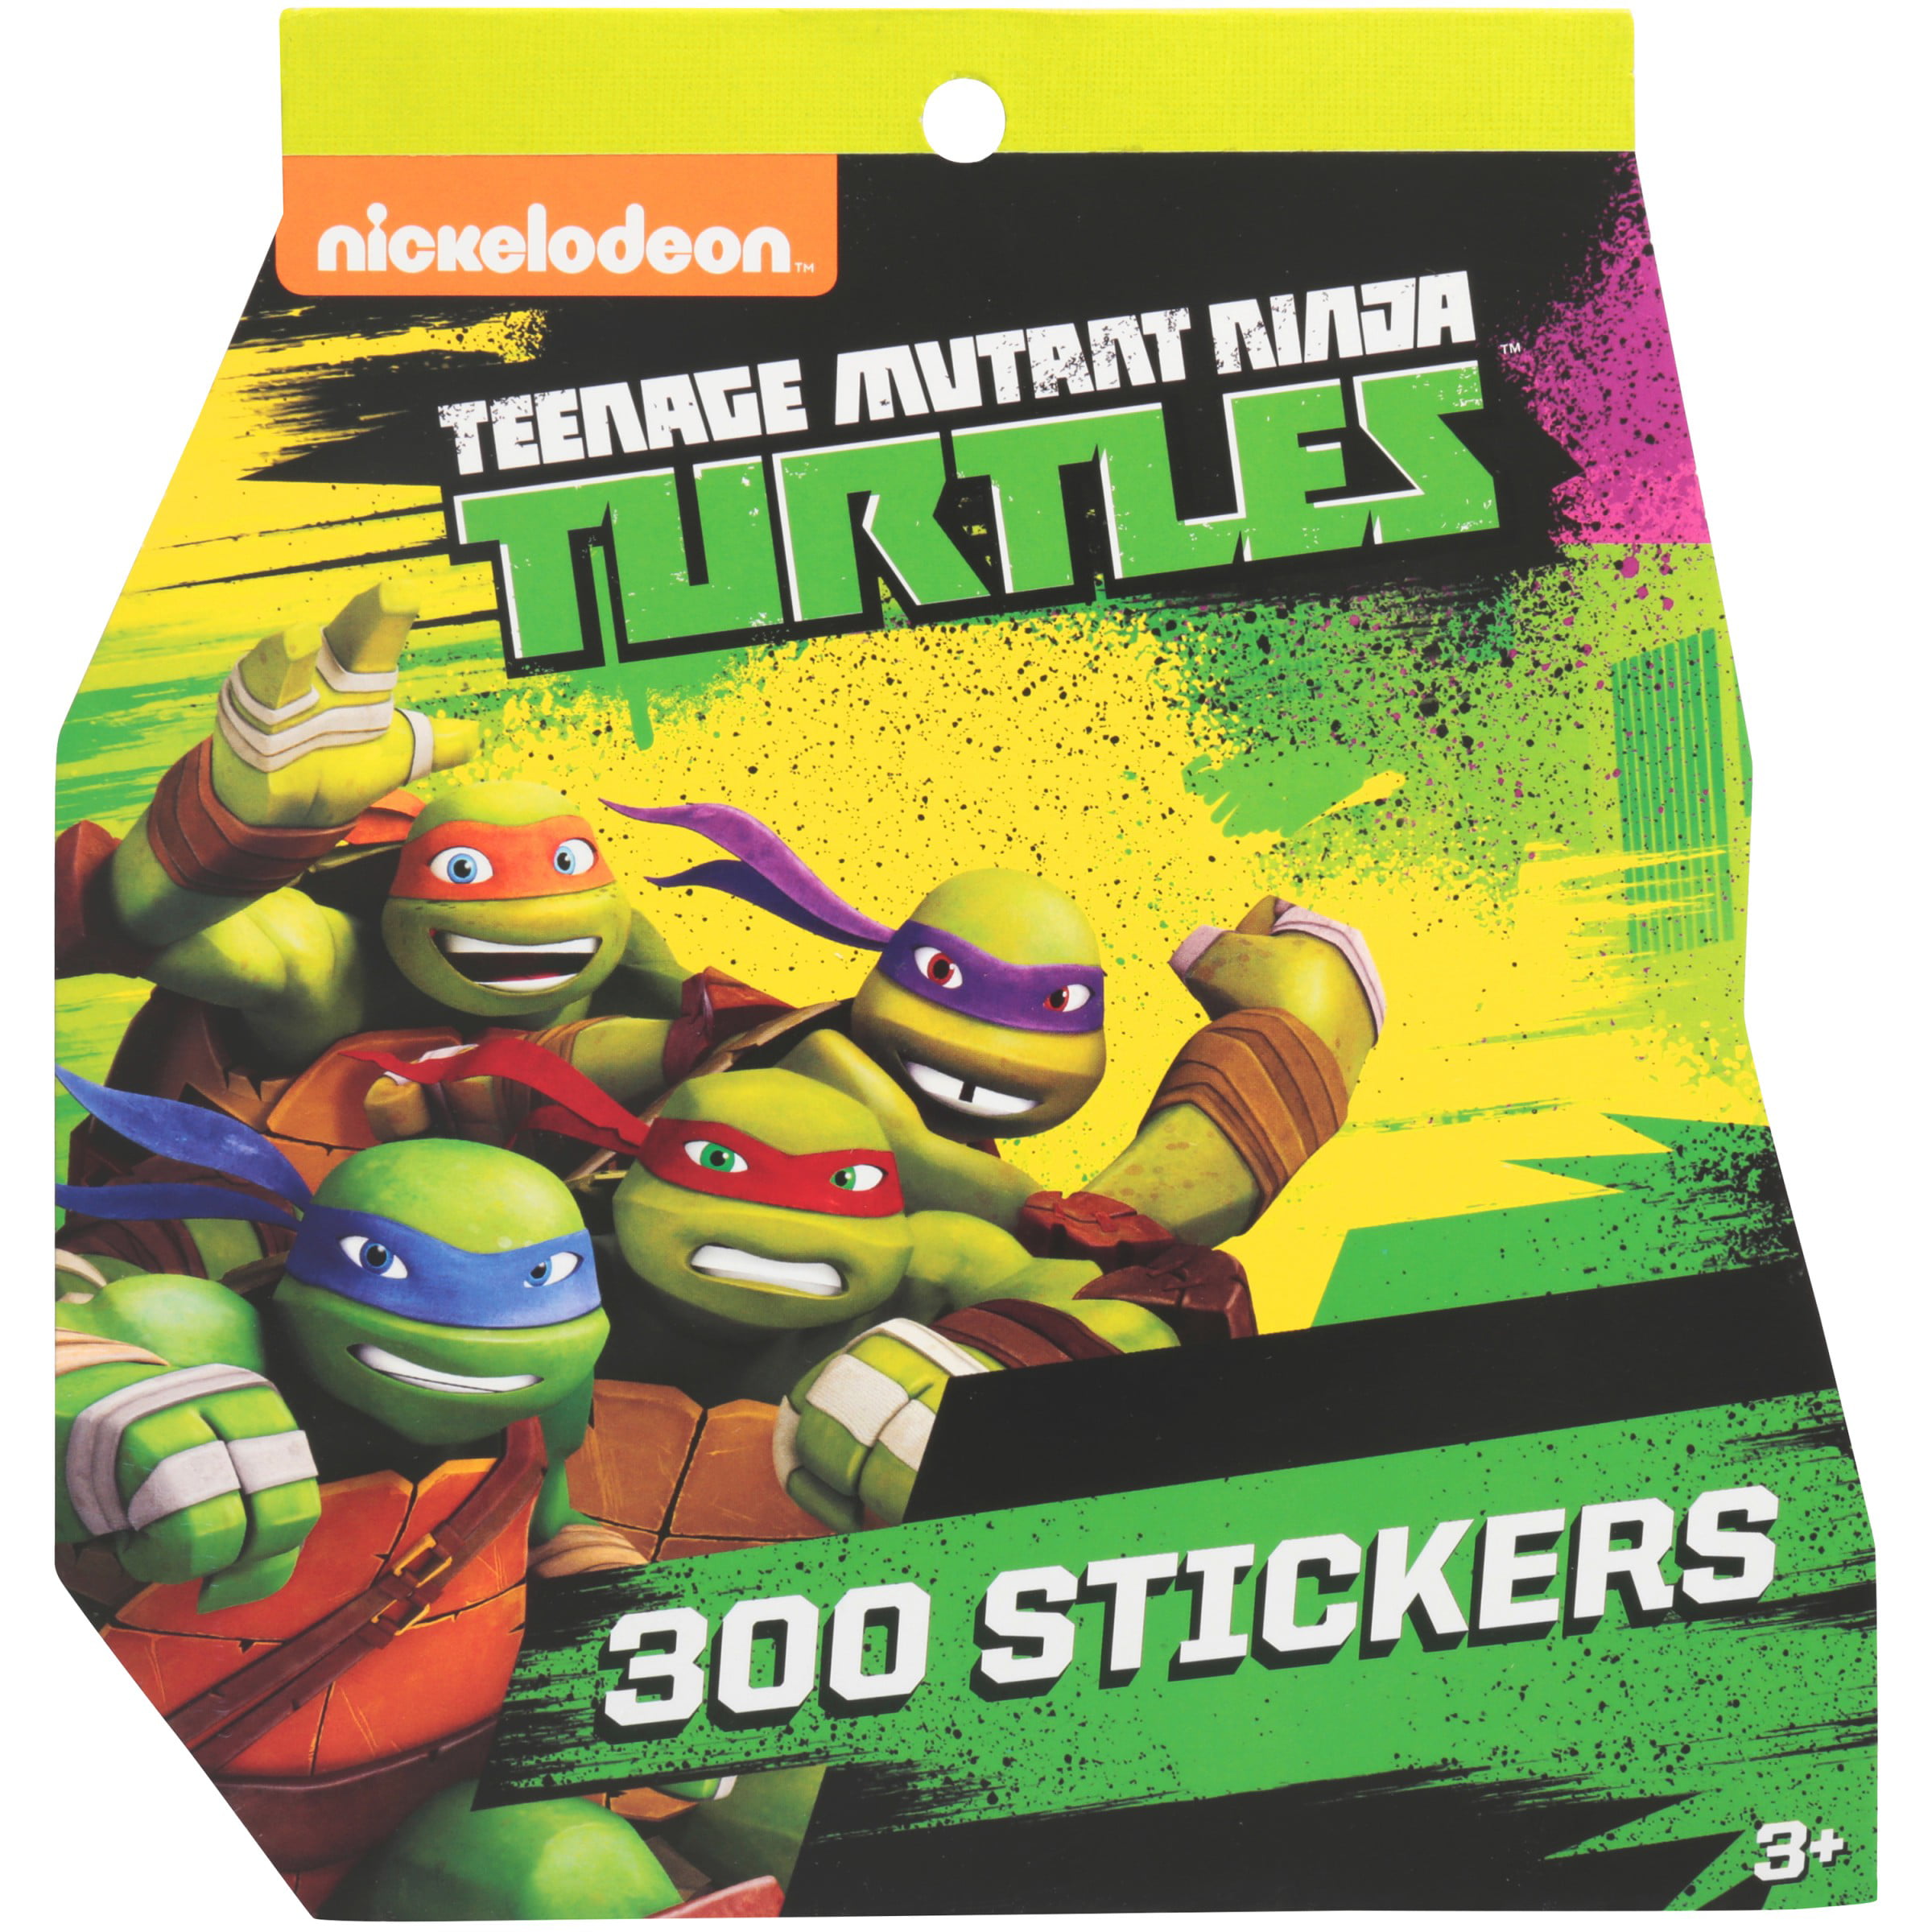 ADHESIVE SCHOOL BOOK LABELS Stickers BRAND NEW TMNT NINJA TURTLES Stationery